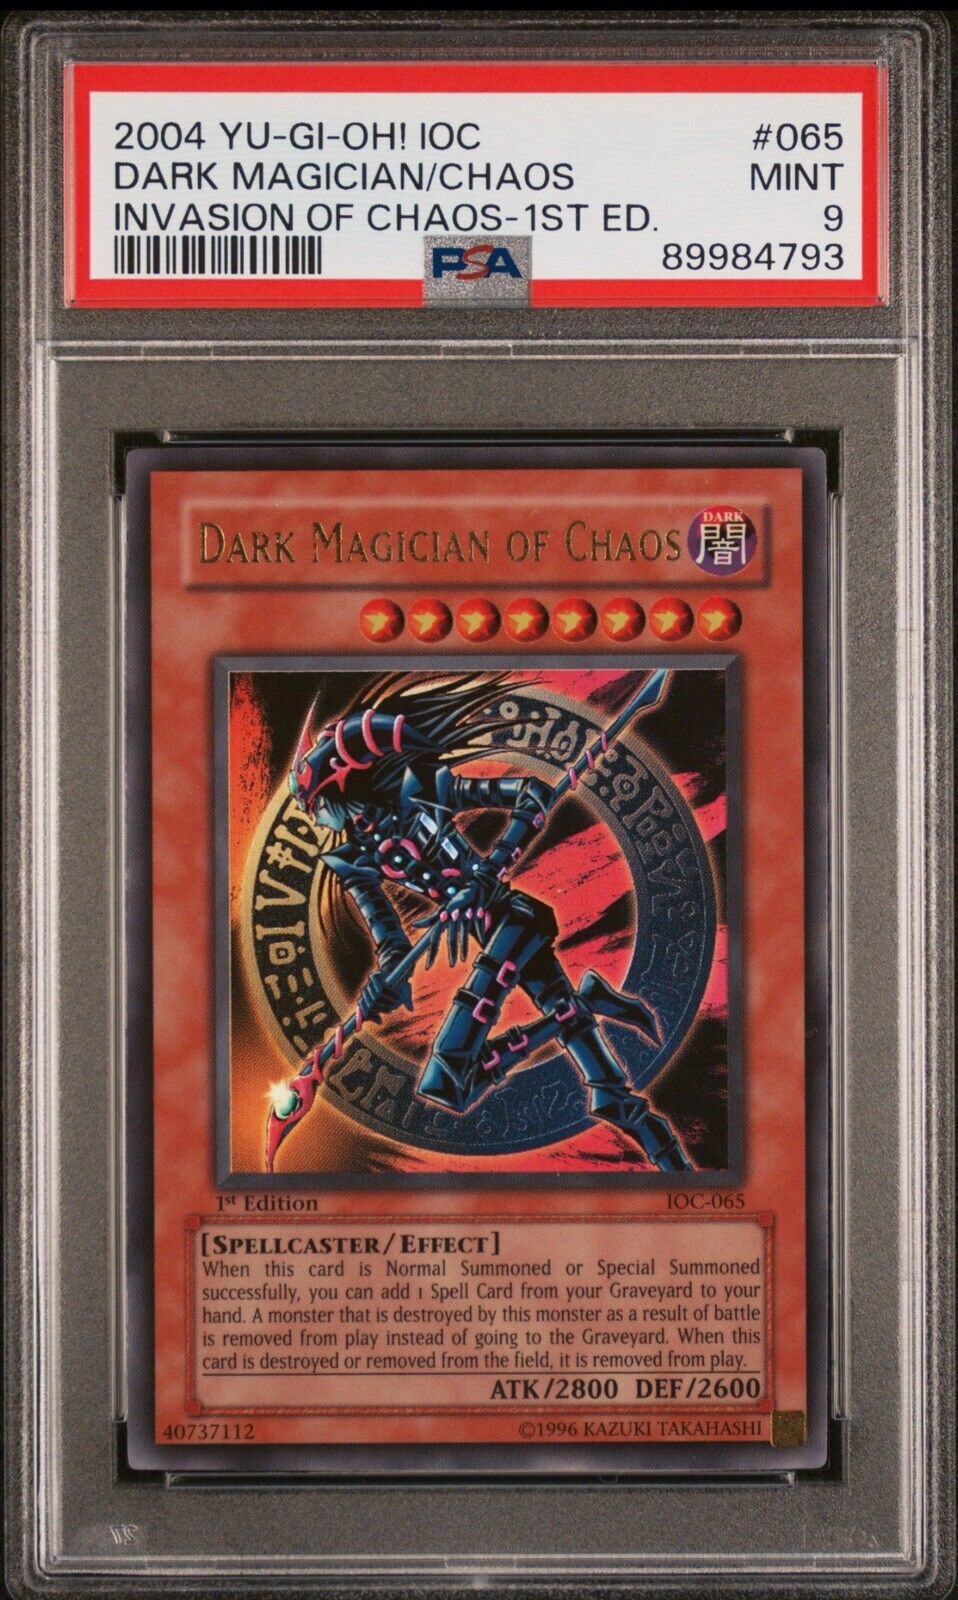 2004 Yu-GI-Oh Dark Magician of Chaos IOC-065 1st Edition PSA 9 Mint Ultra Rare